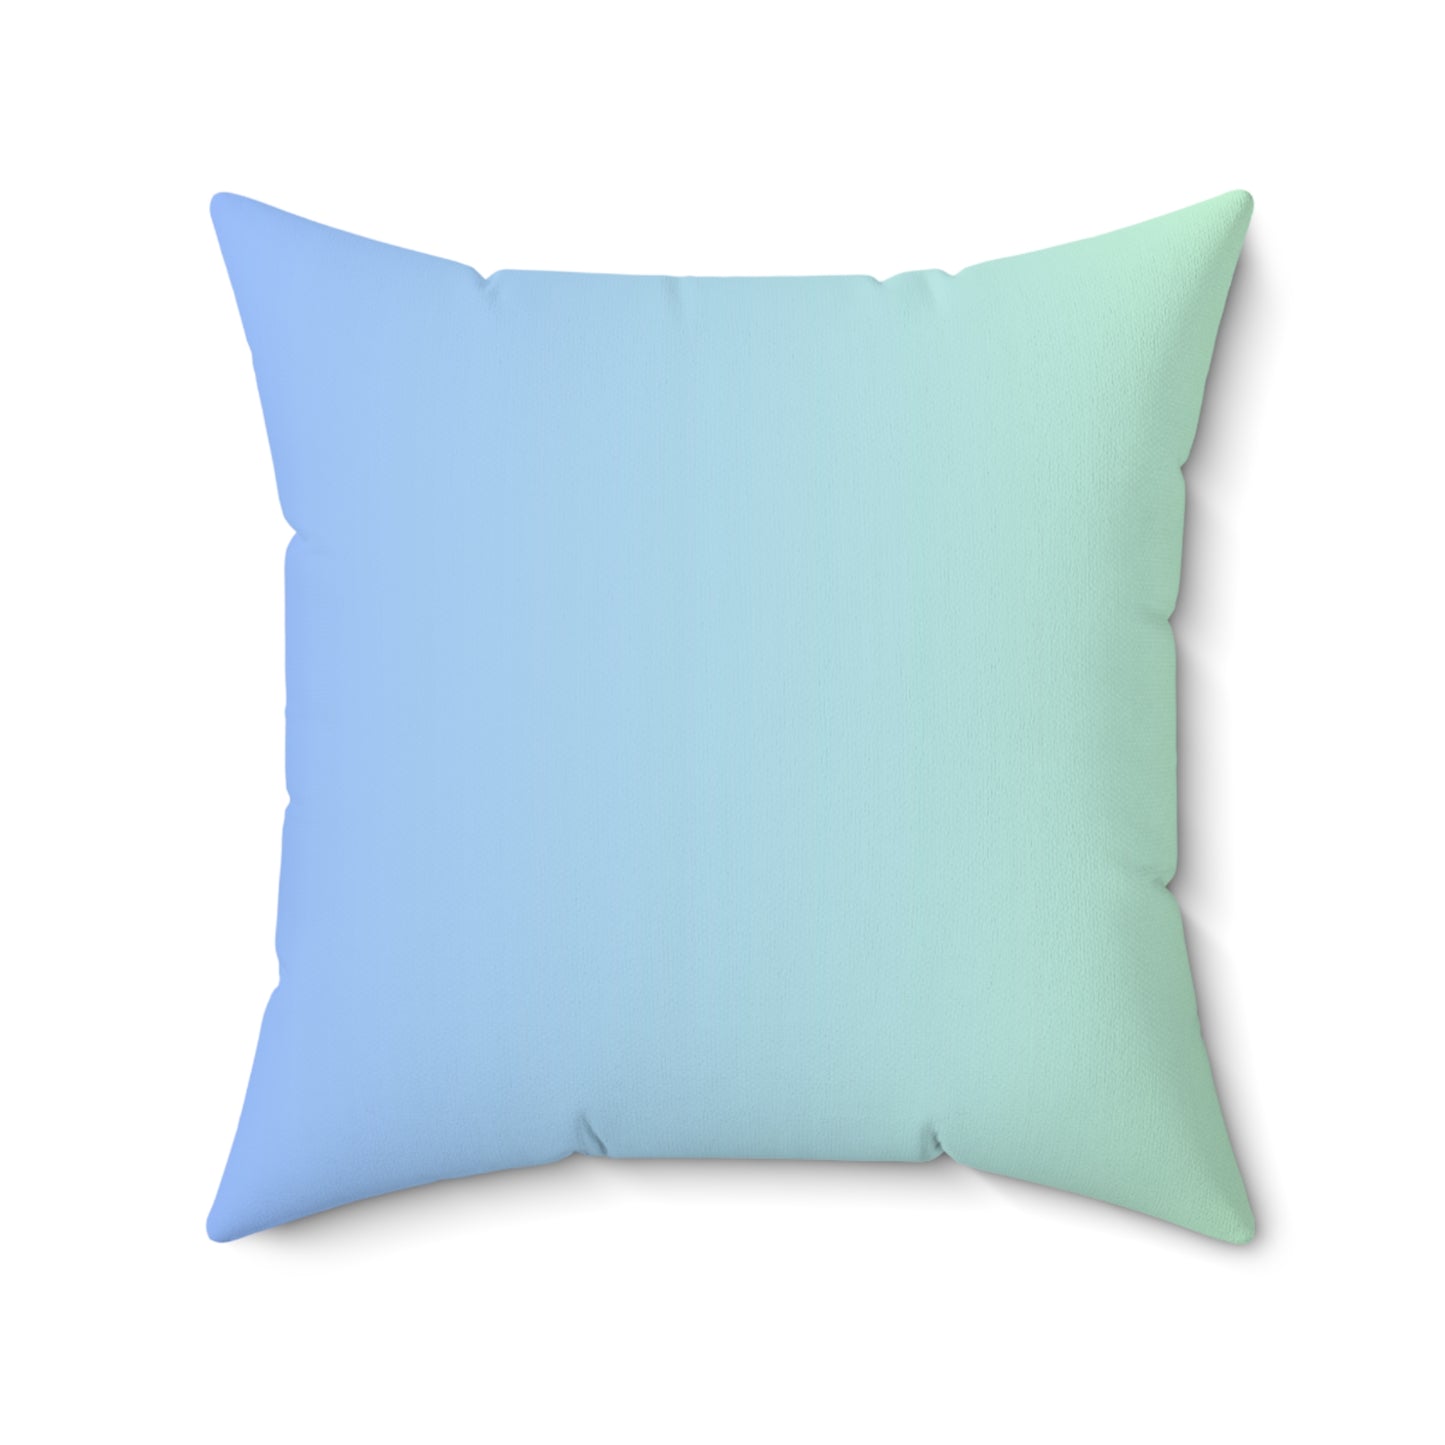 Animal Print (Dual) - Blue-Green Ombre' Throw Pillow